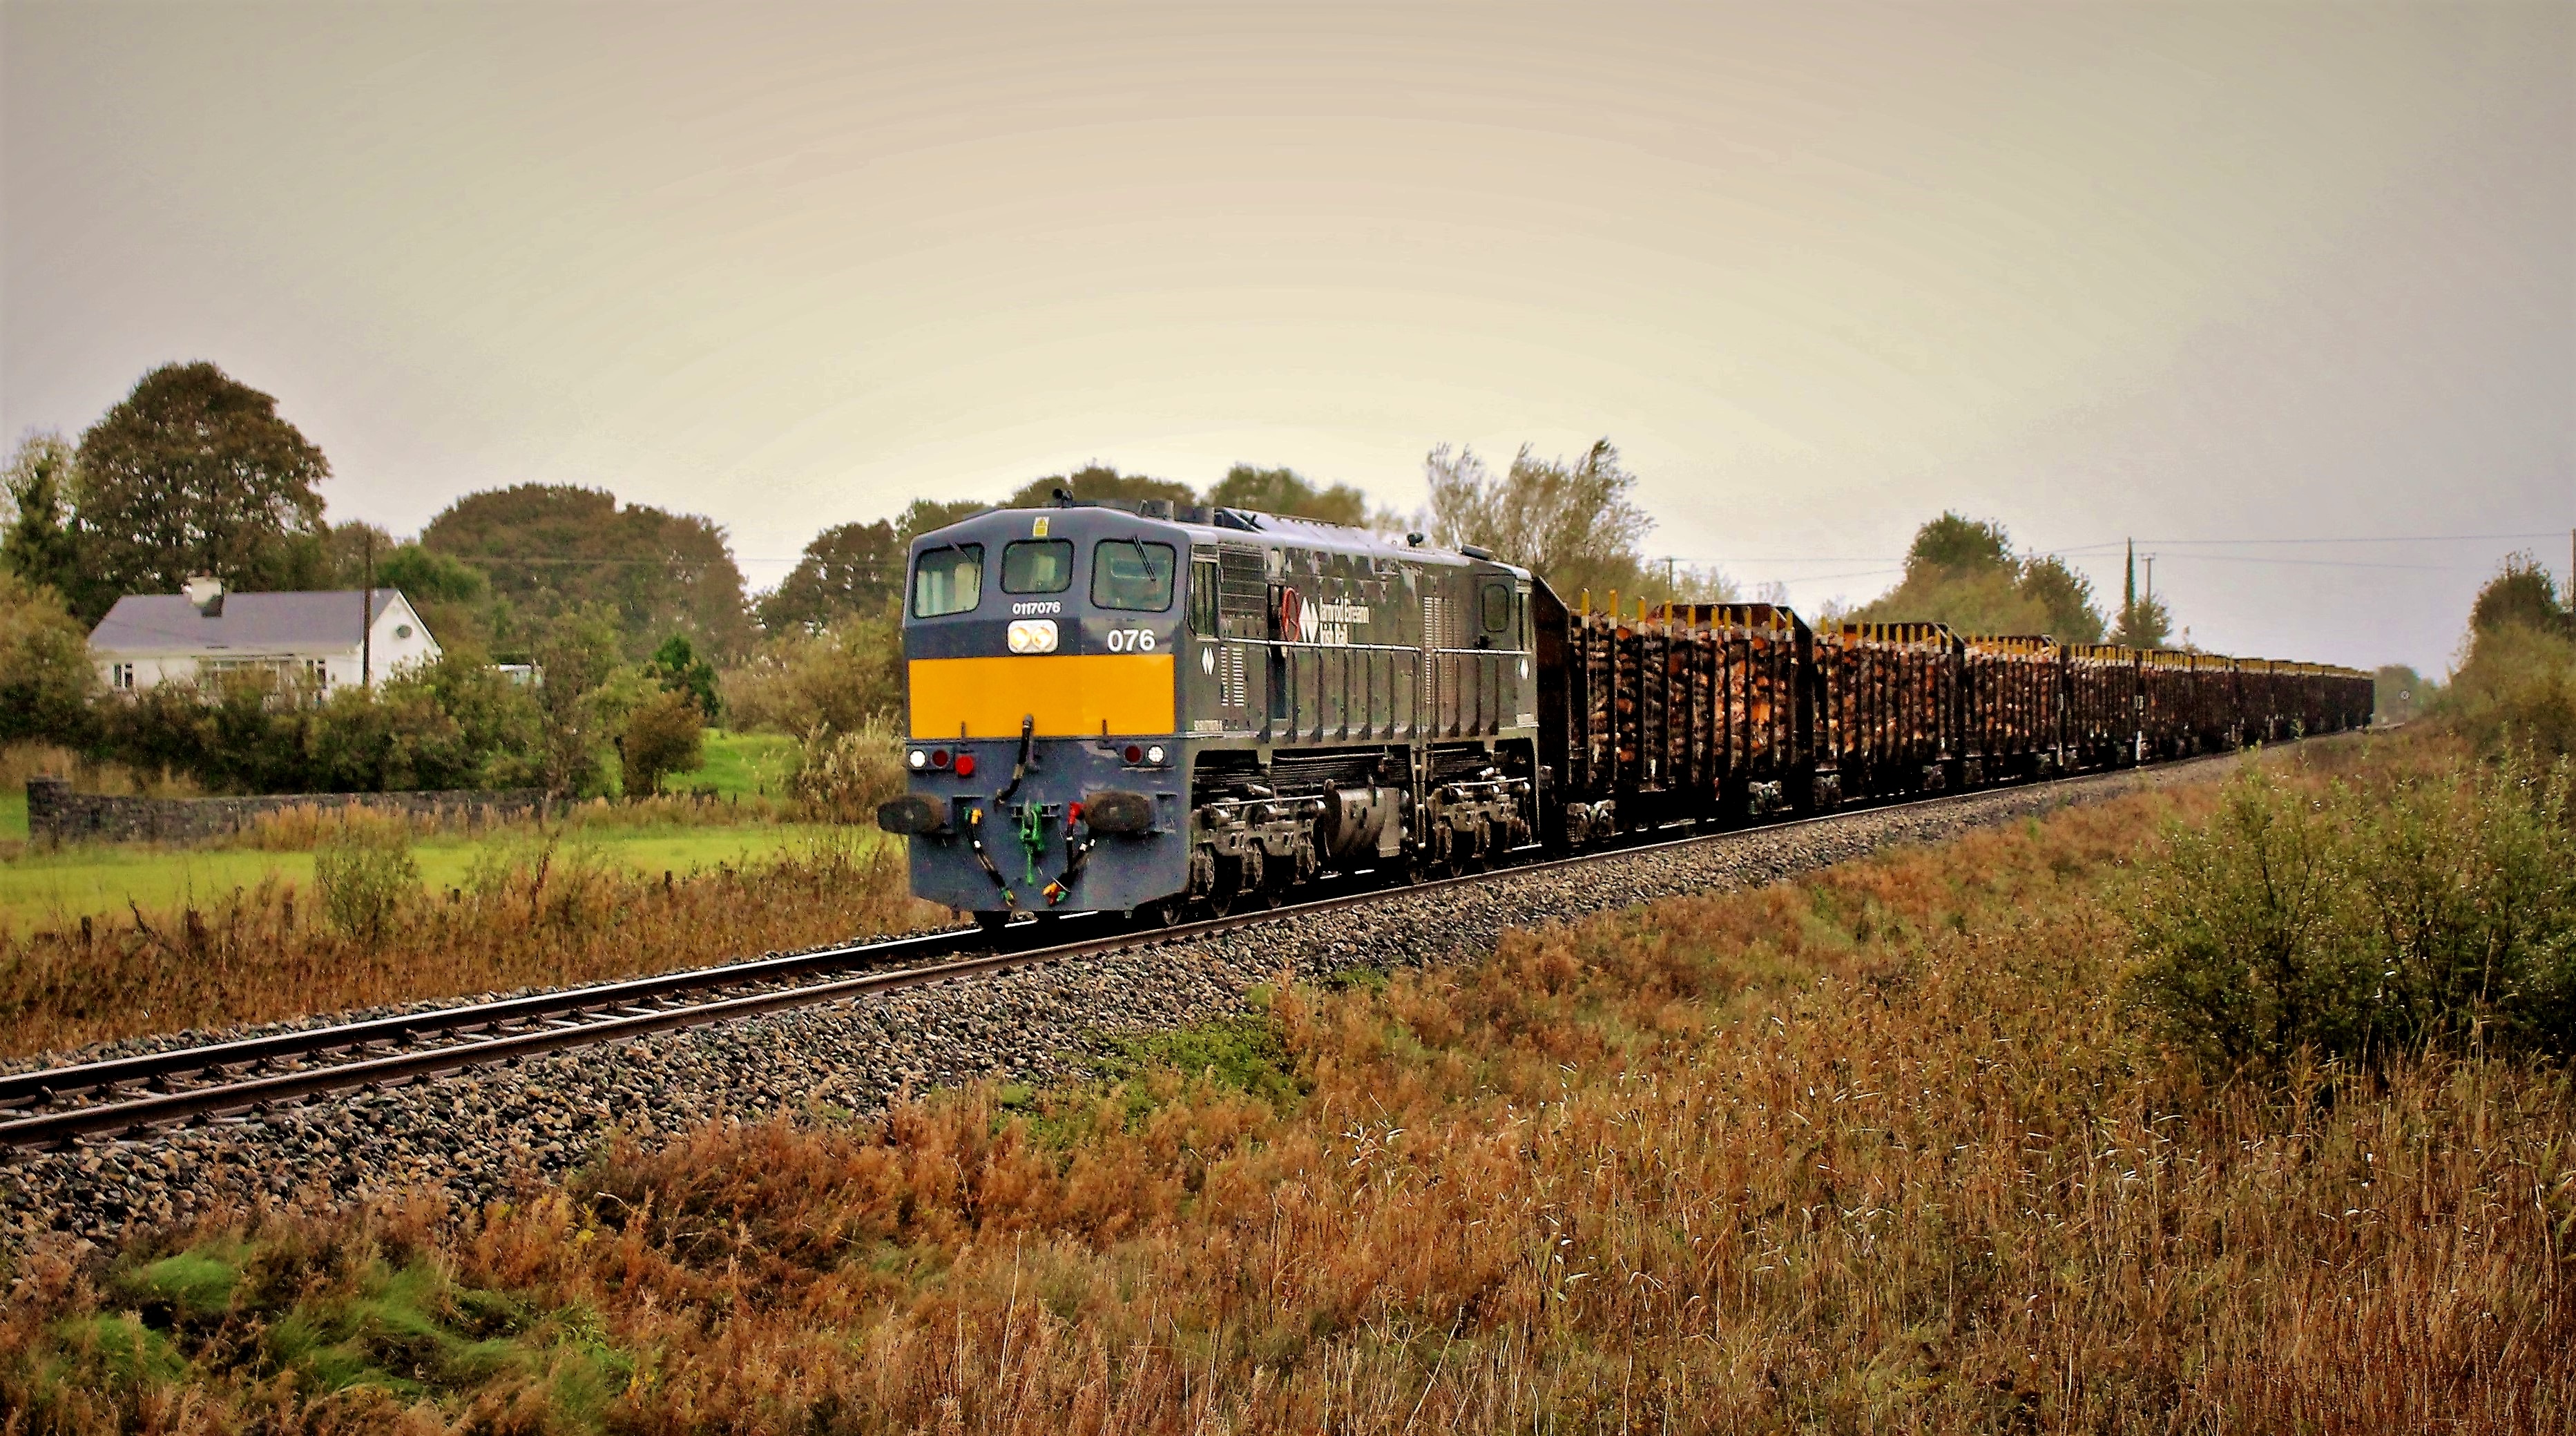 071 class locomotive, hauling timber